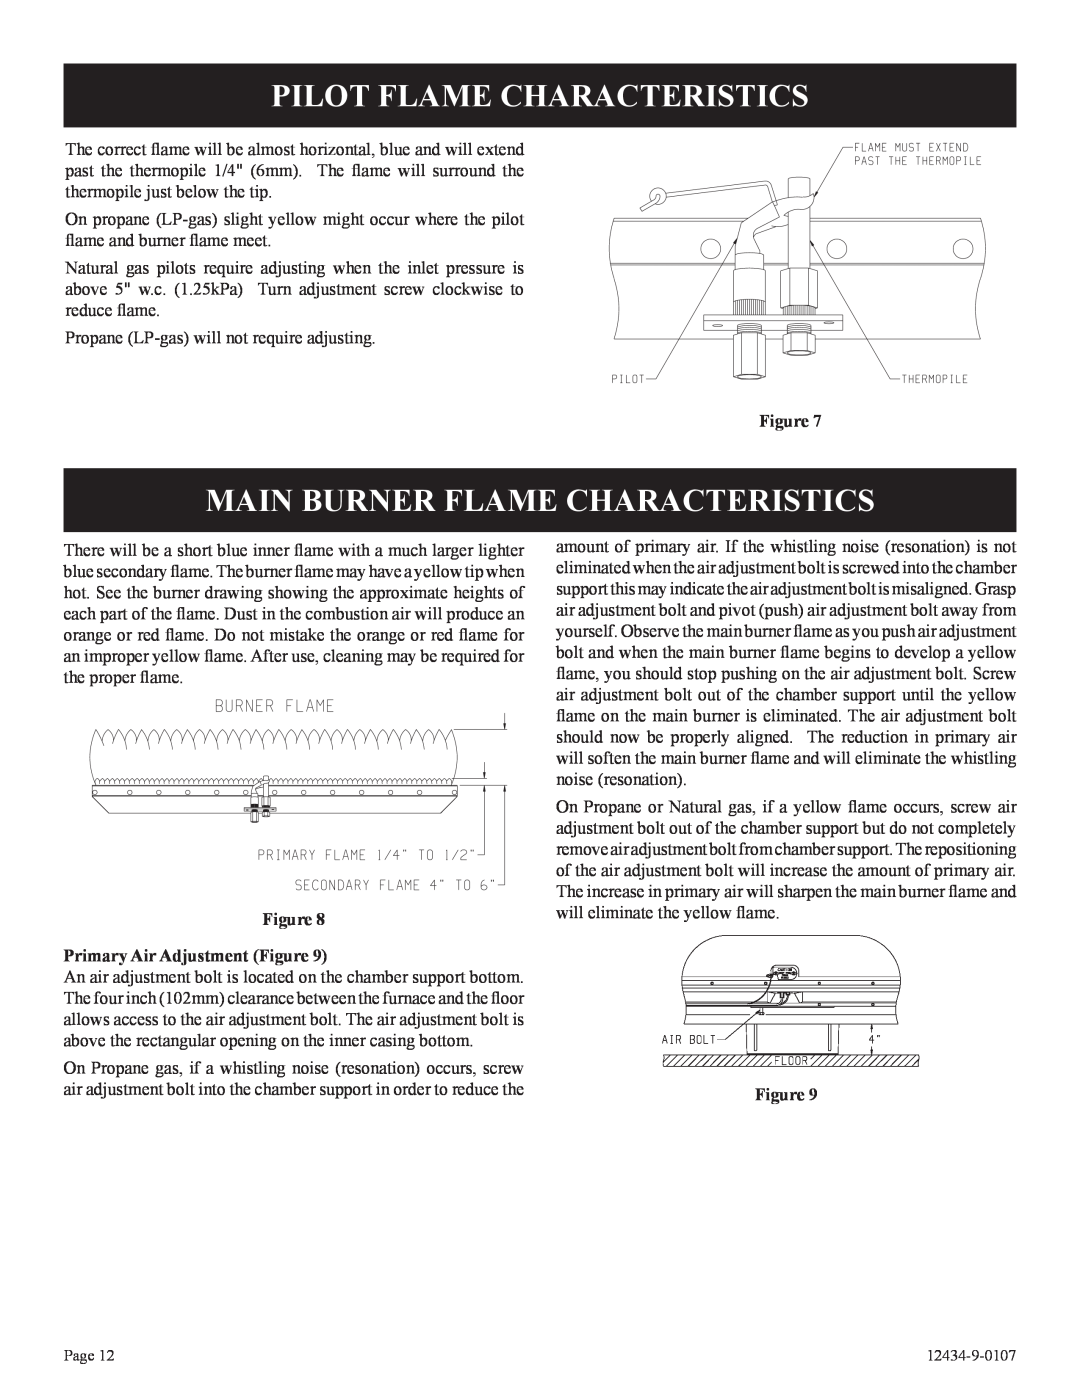 Empire Comfort Systems DV-35-2SG installation instructions Pilot Flame Characteristics, Main Burner Flame Characteristics 